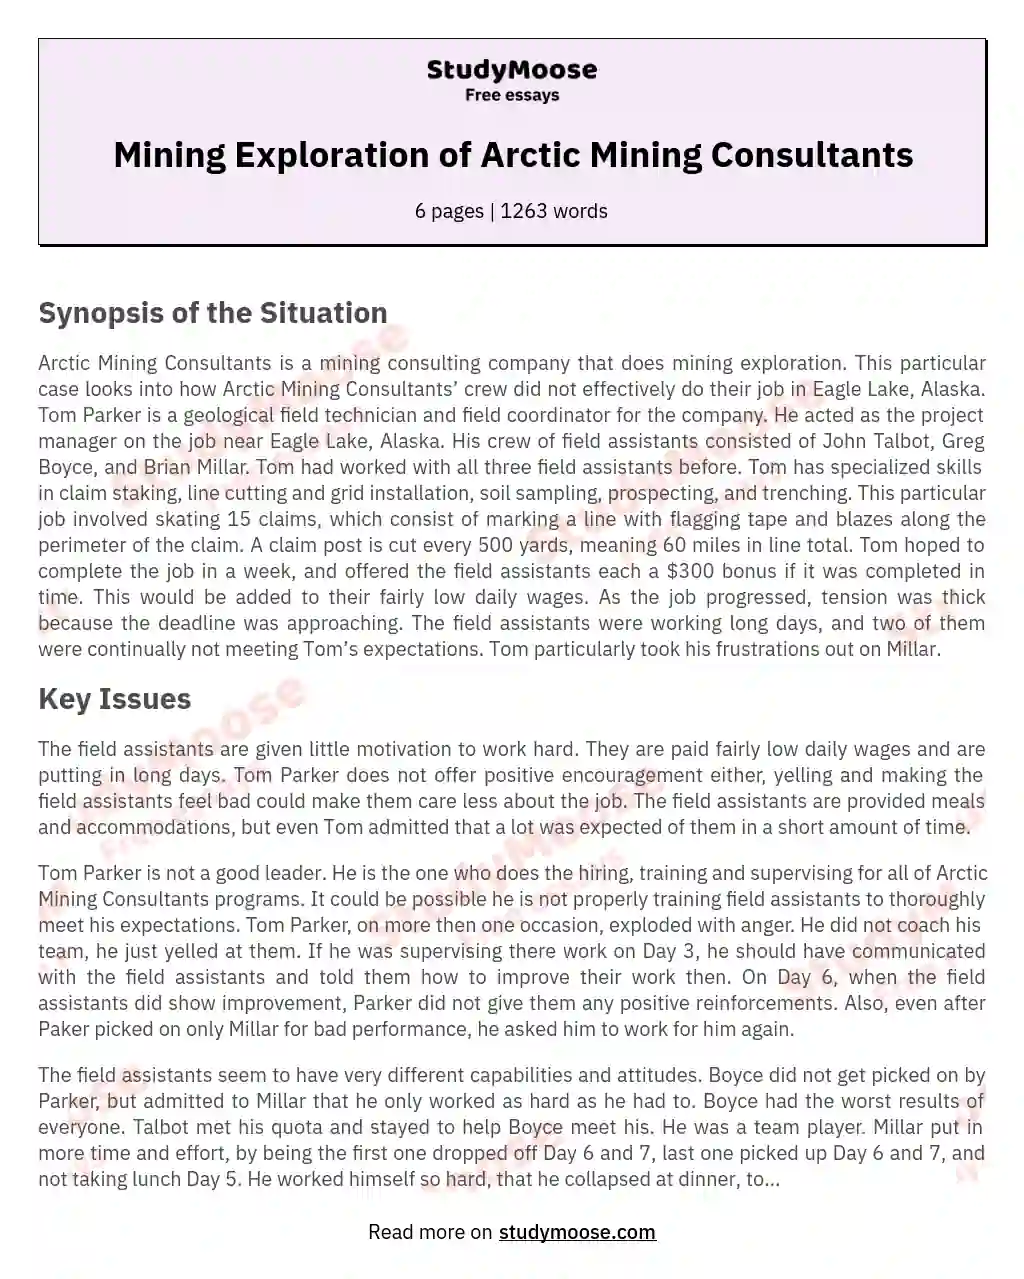 Mining Exploration of Arctic Mining Consultants essay